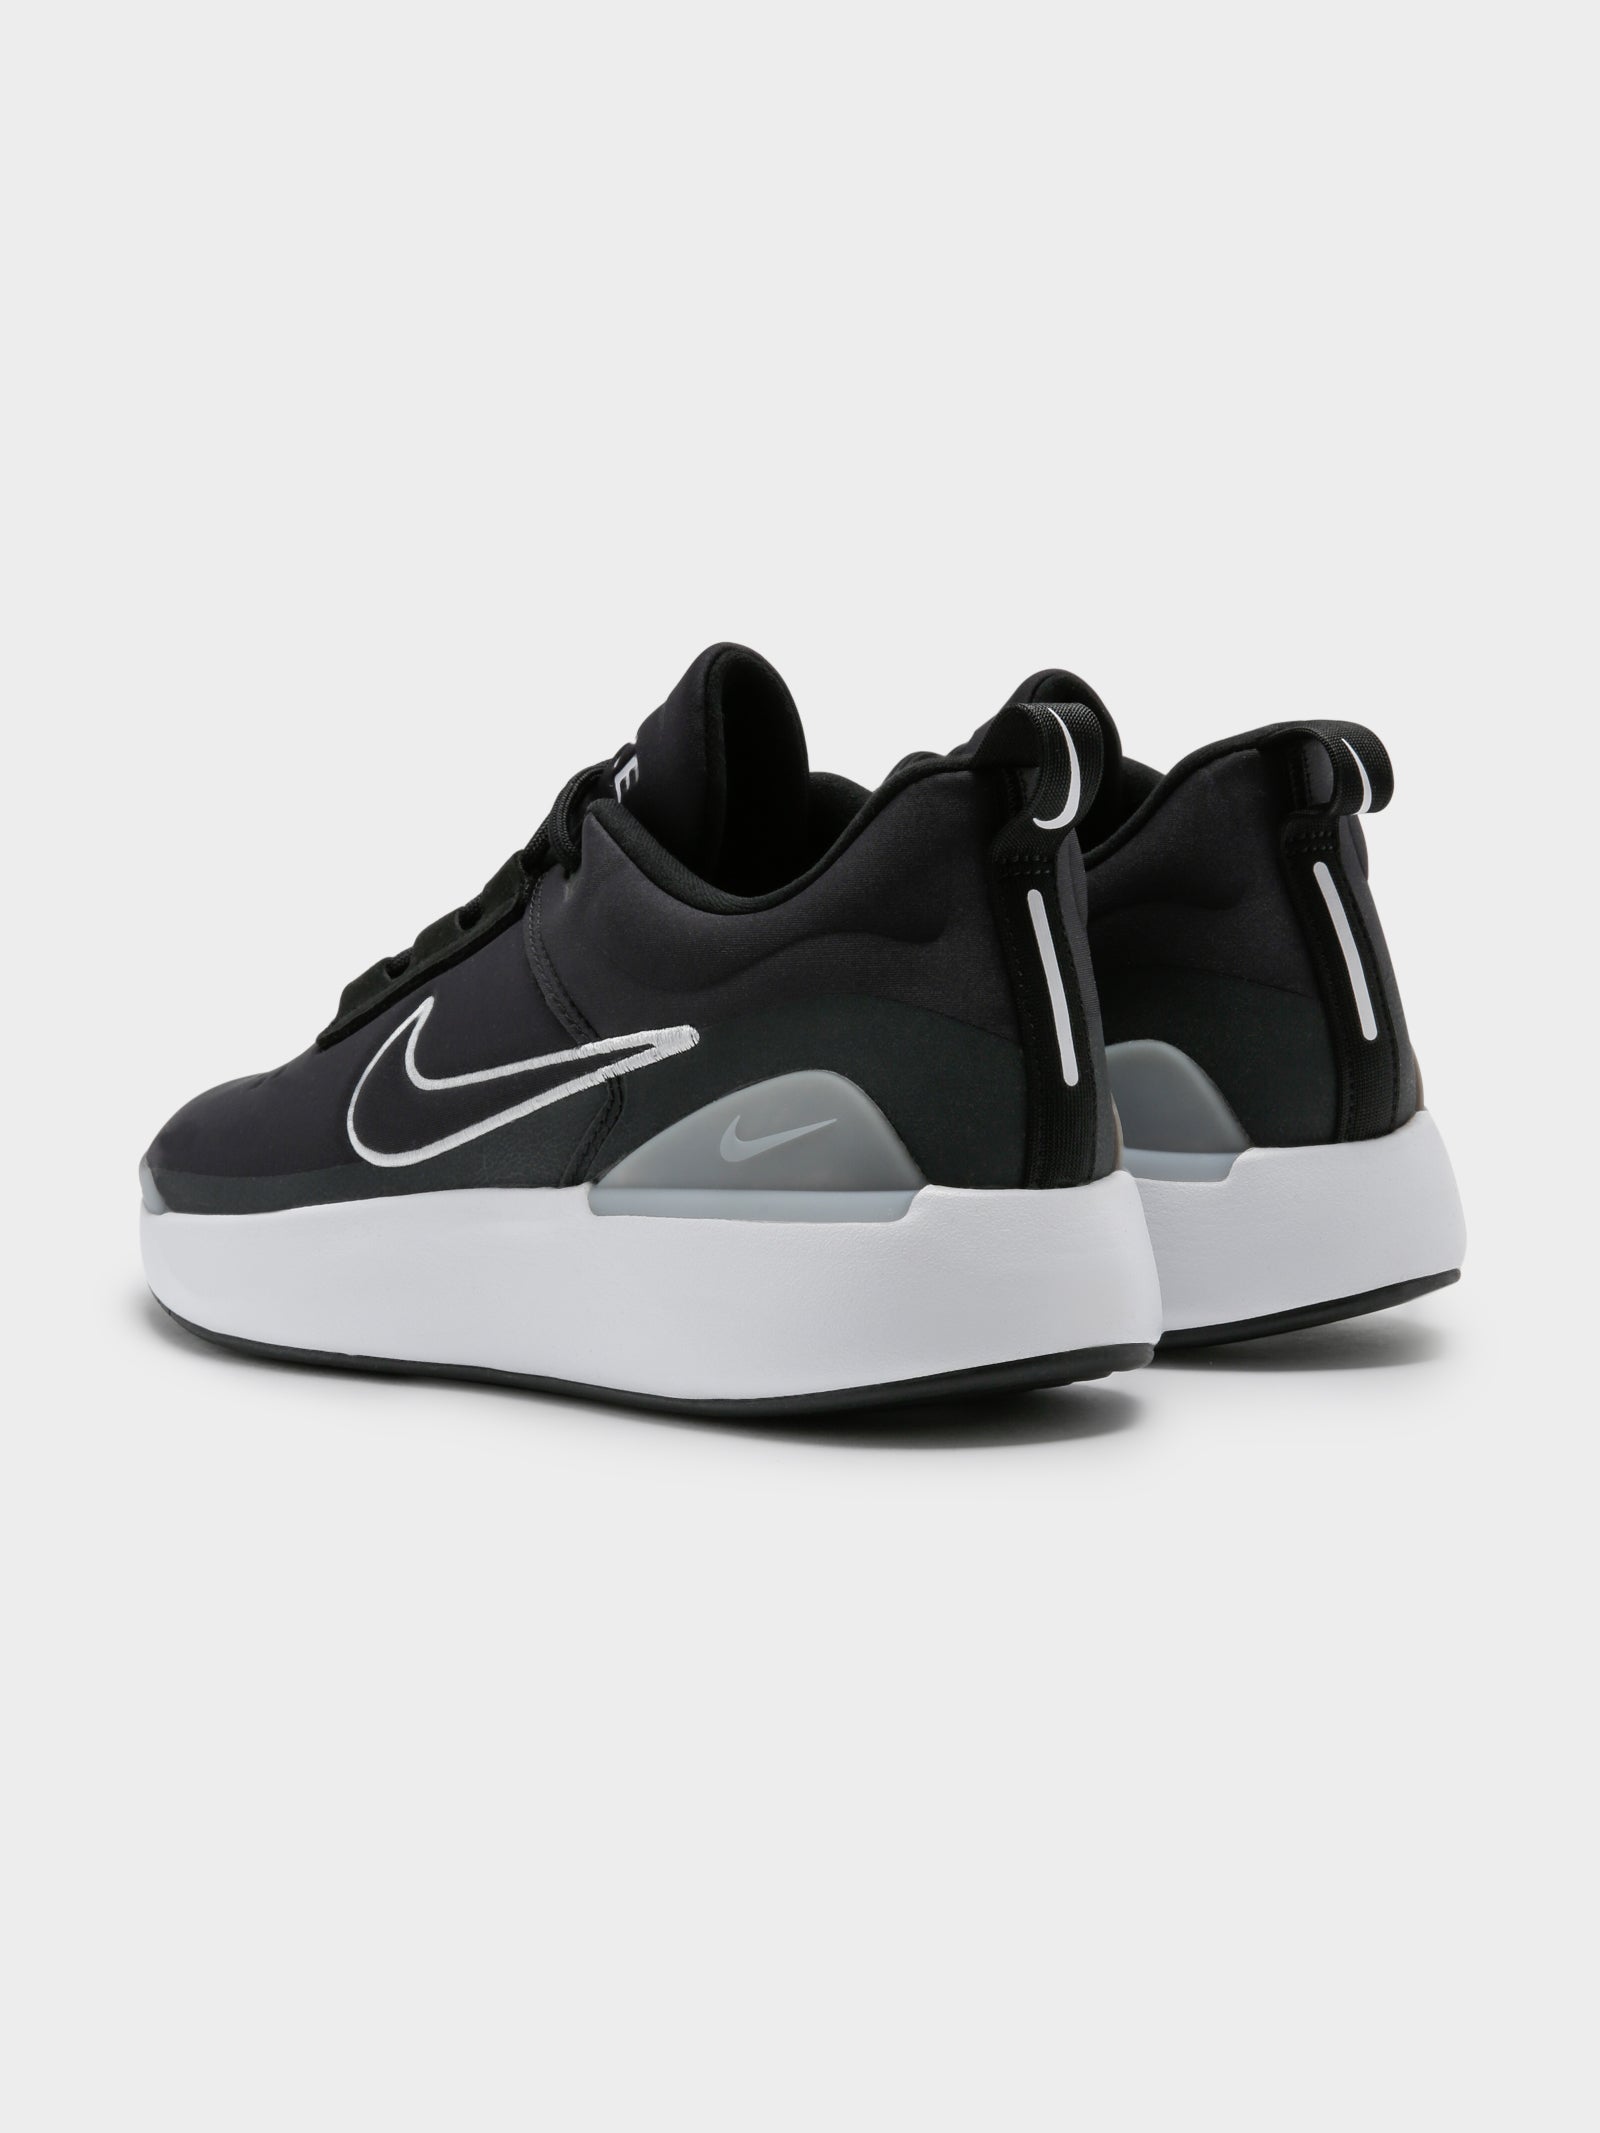 Mens E-Series 1.0 Sneakers in Black & White